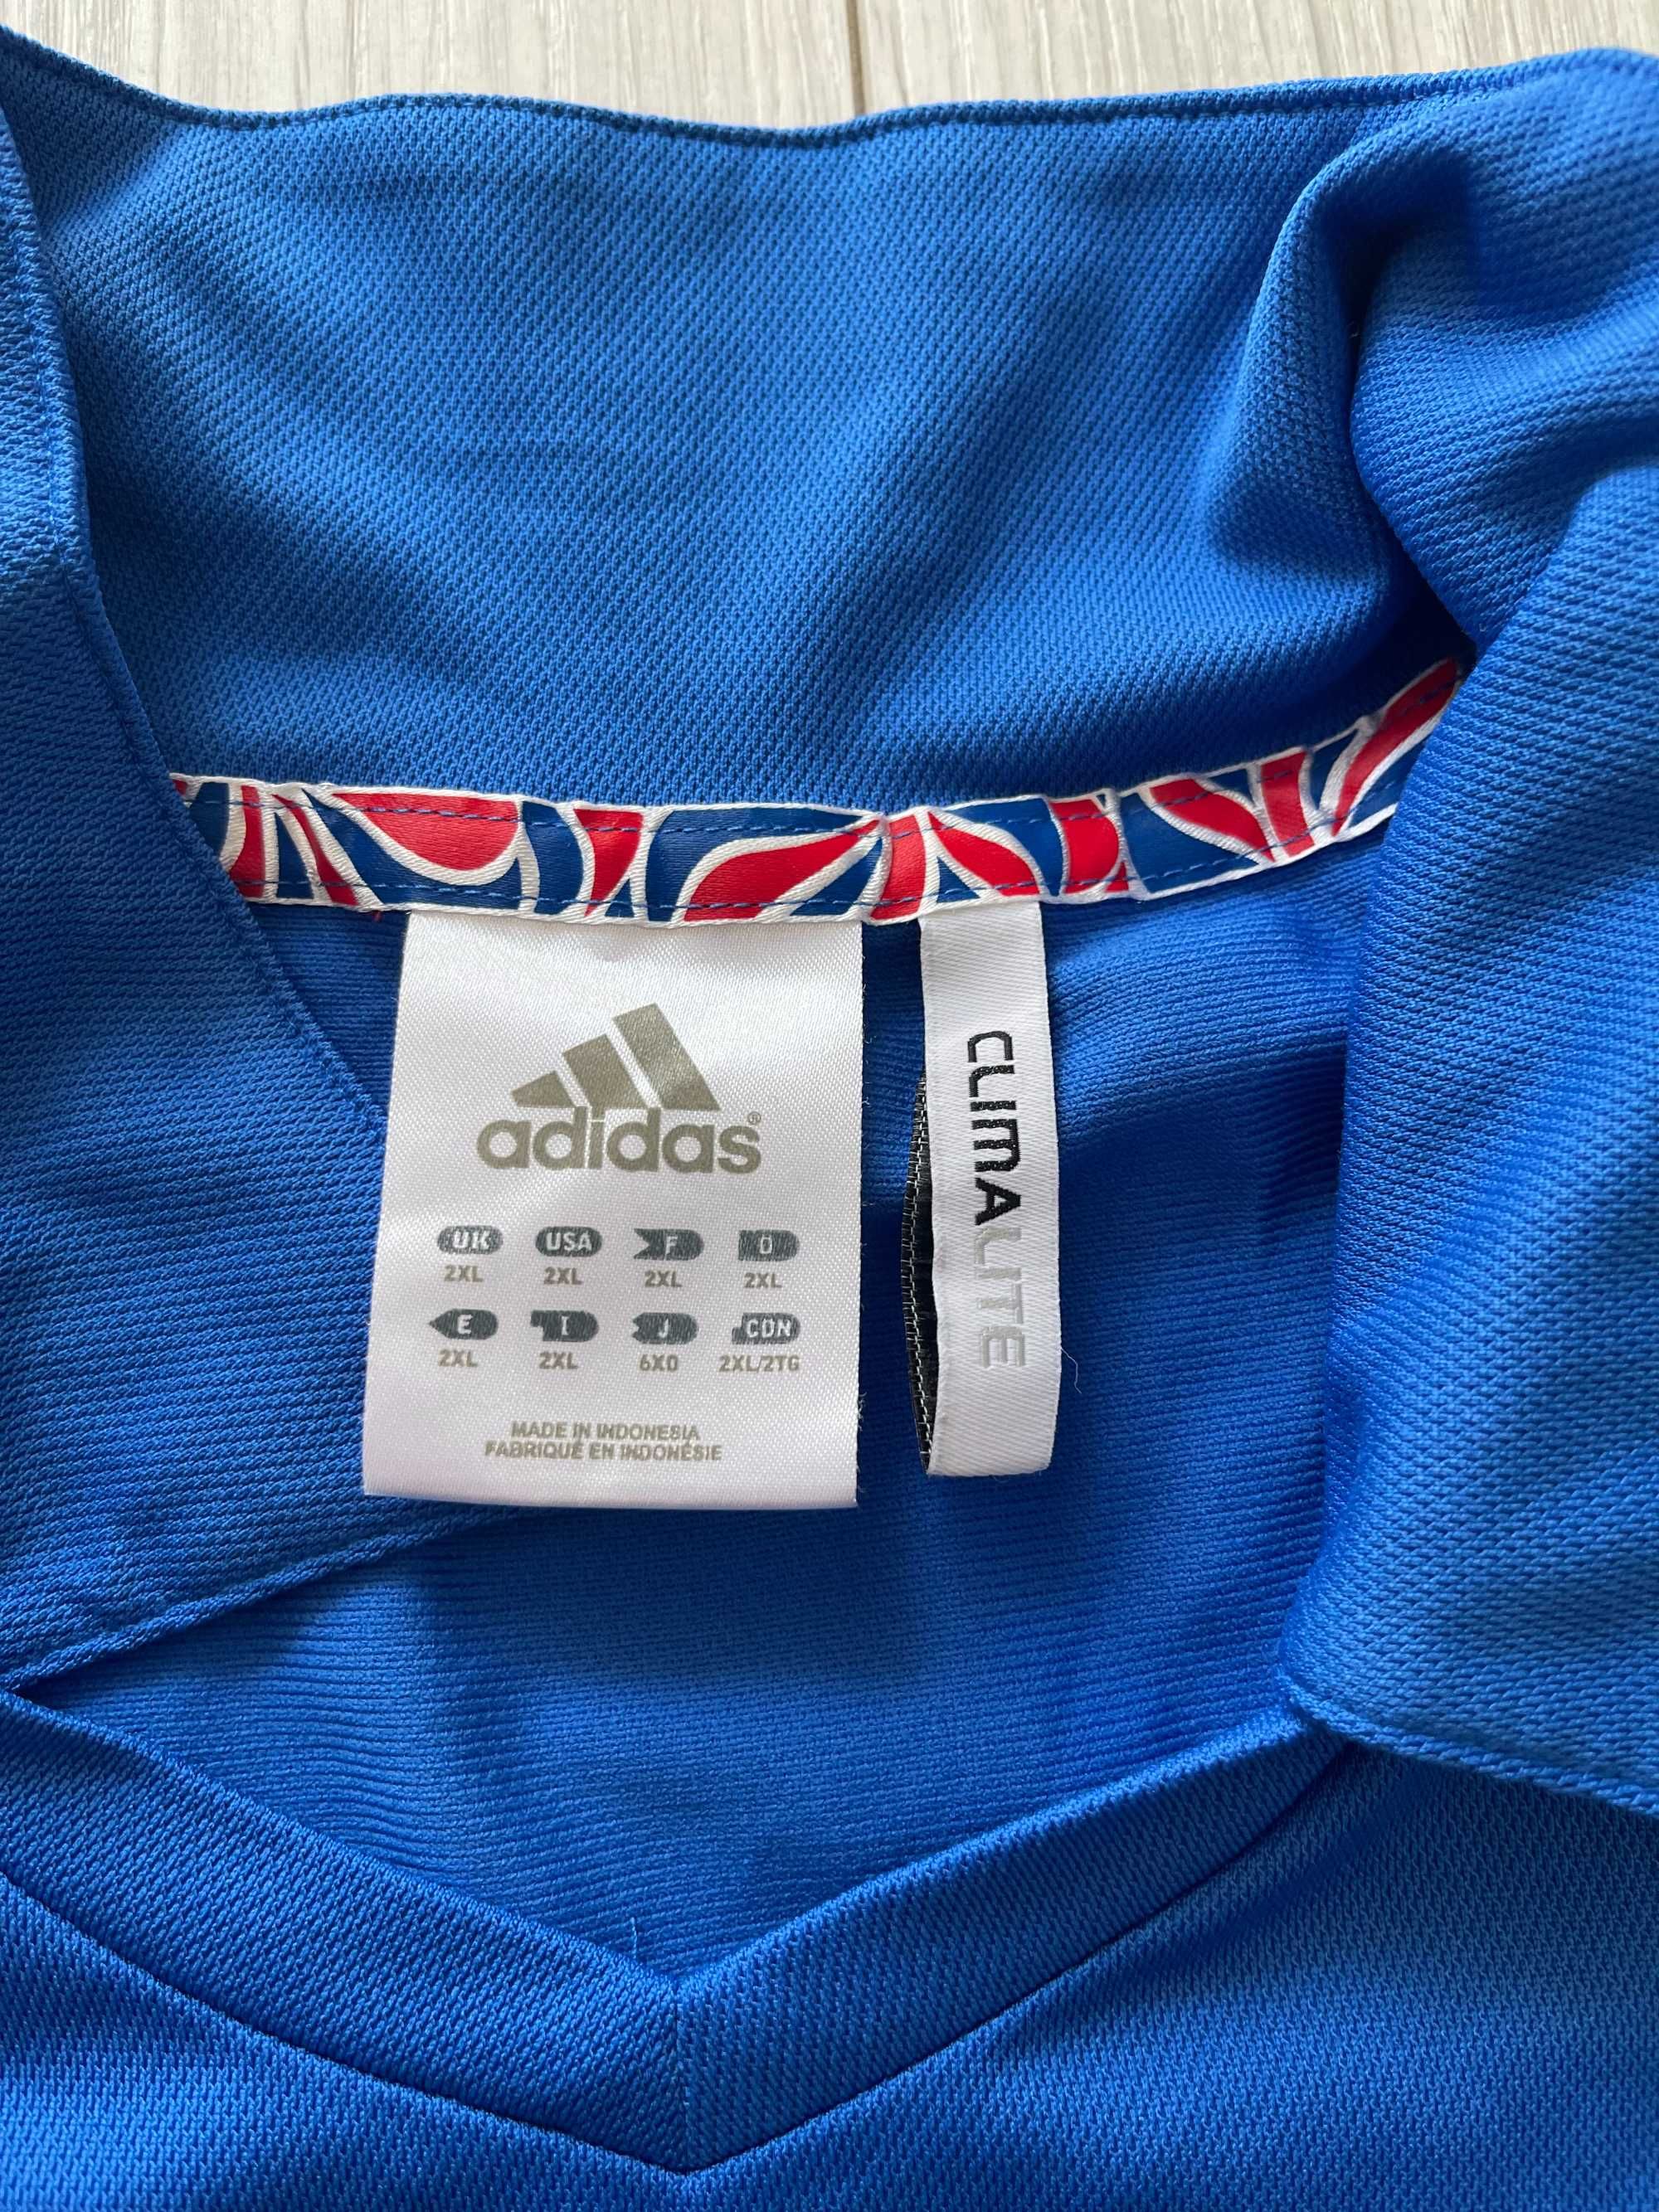 Great Britain Olympic Adidas Shirt 2XL